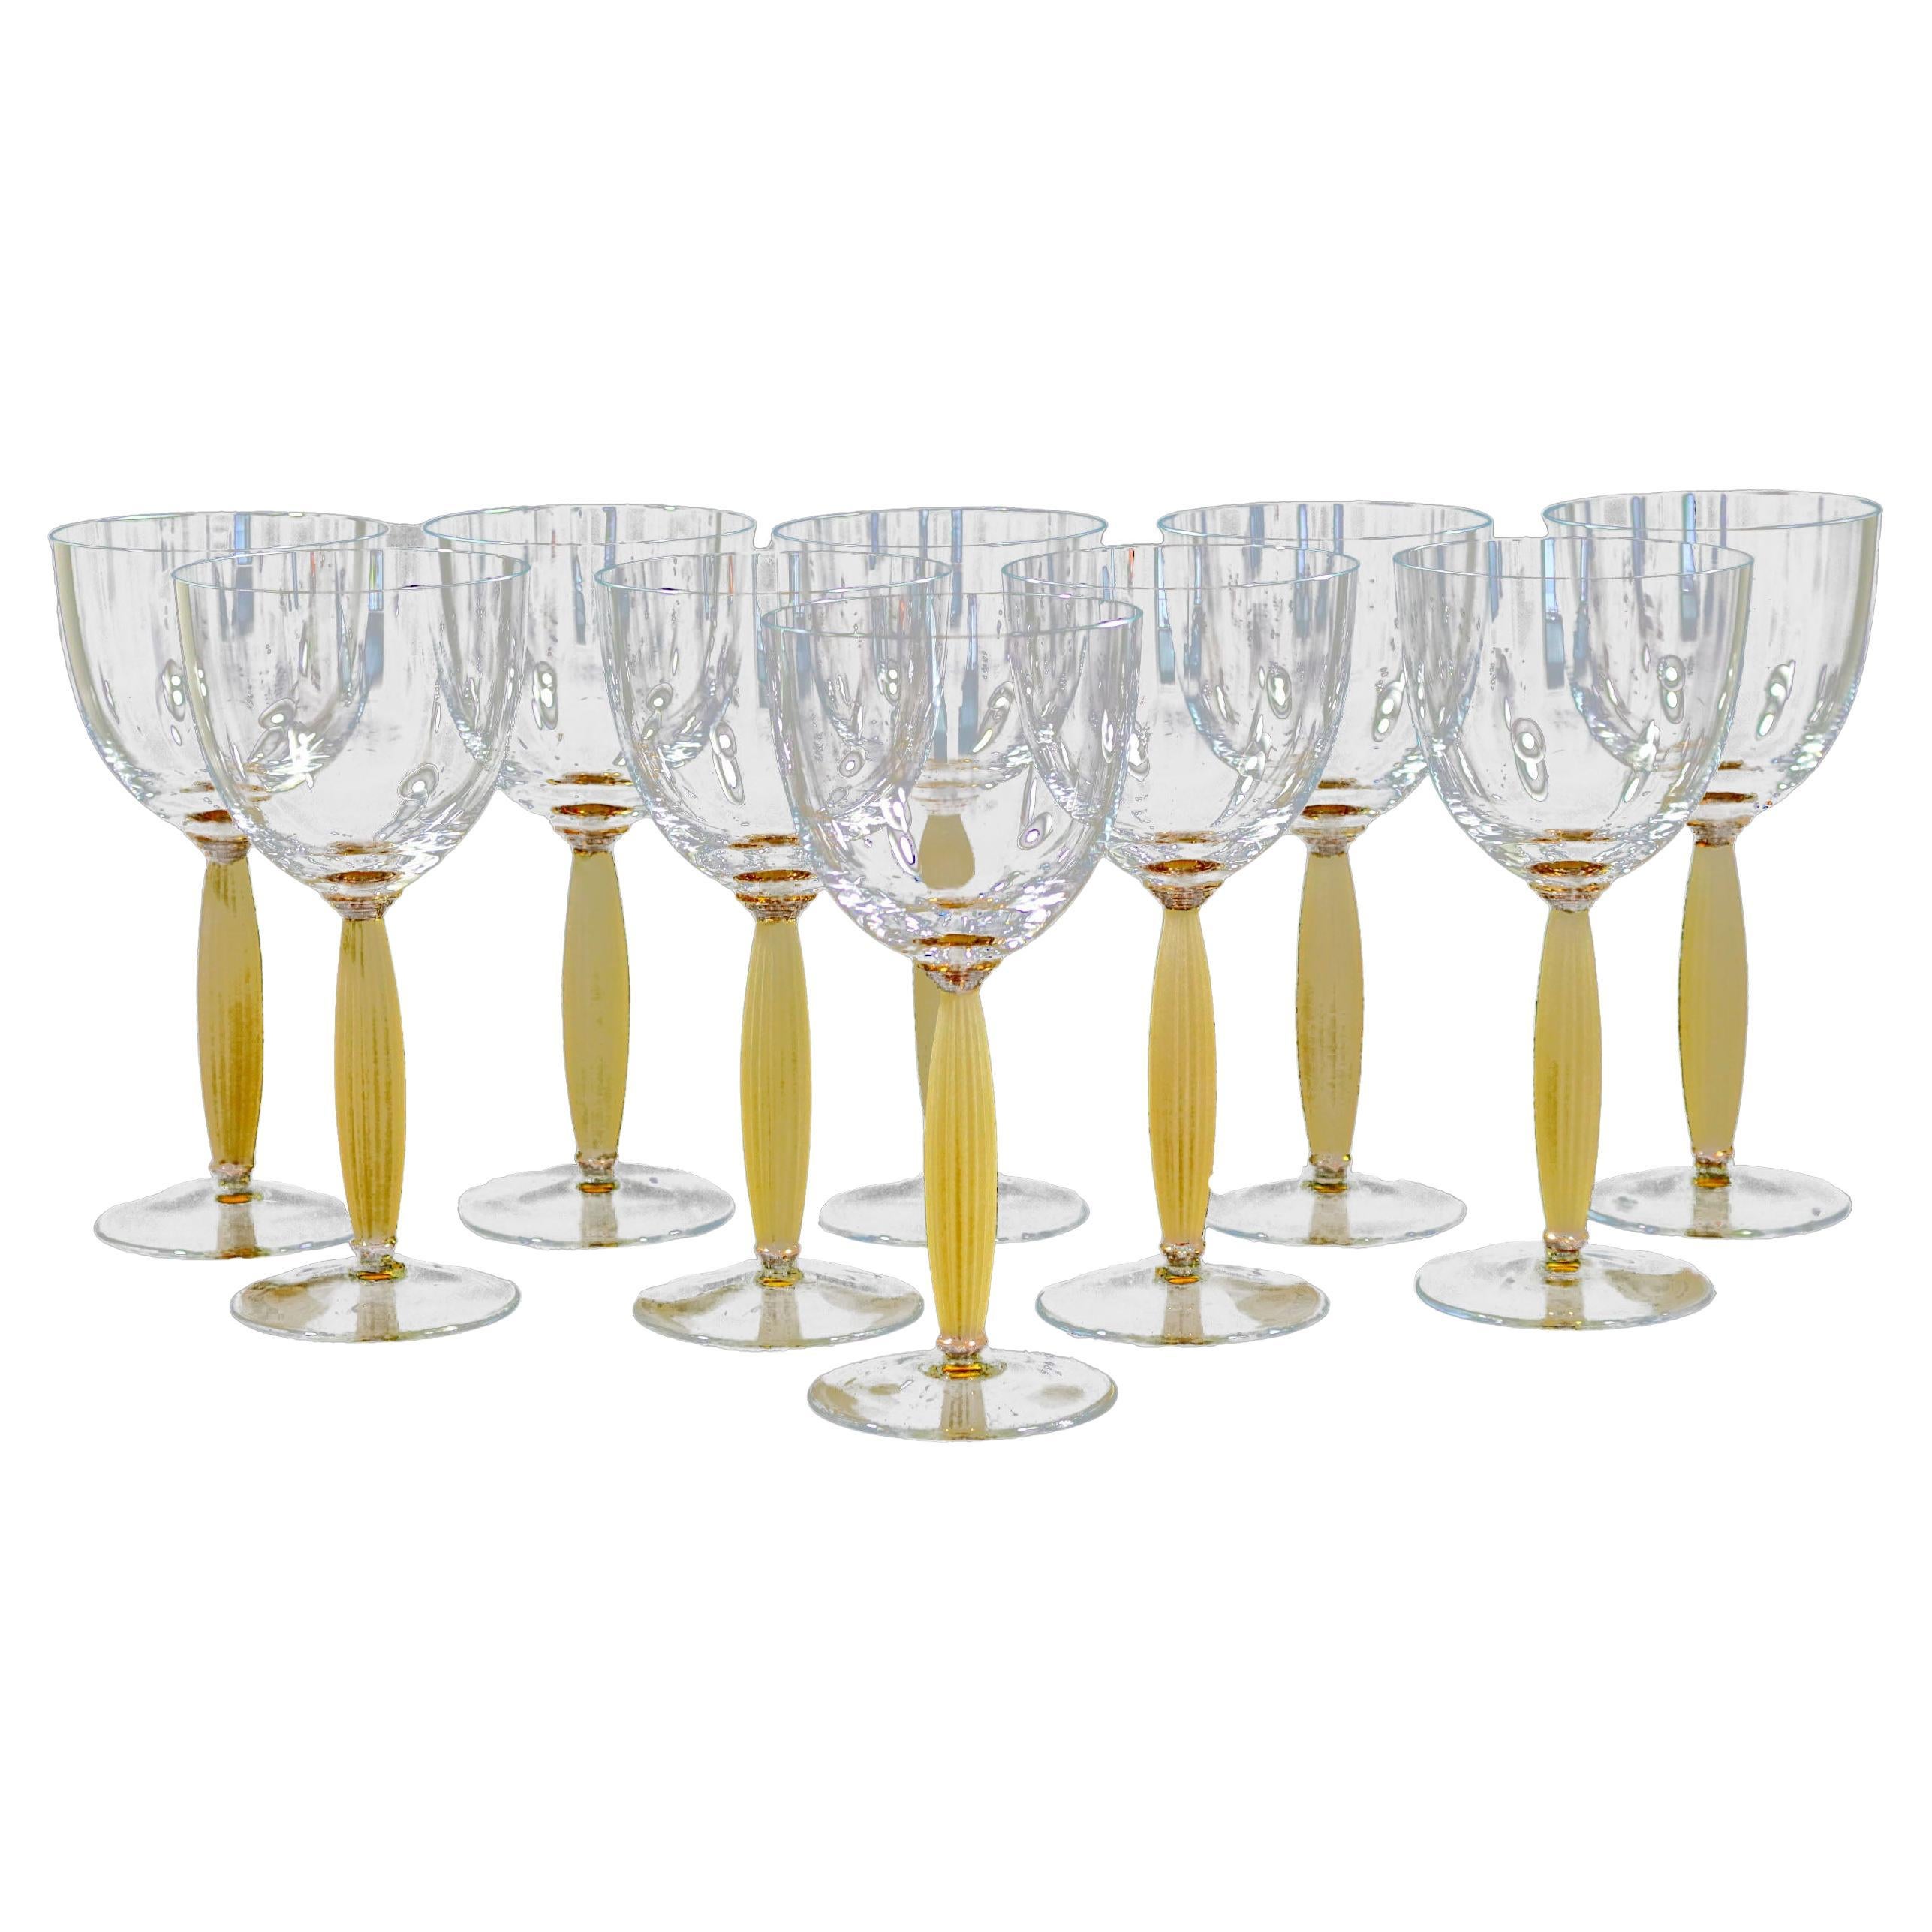 Set of 10 Wine Glasses, Mid 20th Century